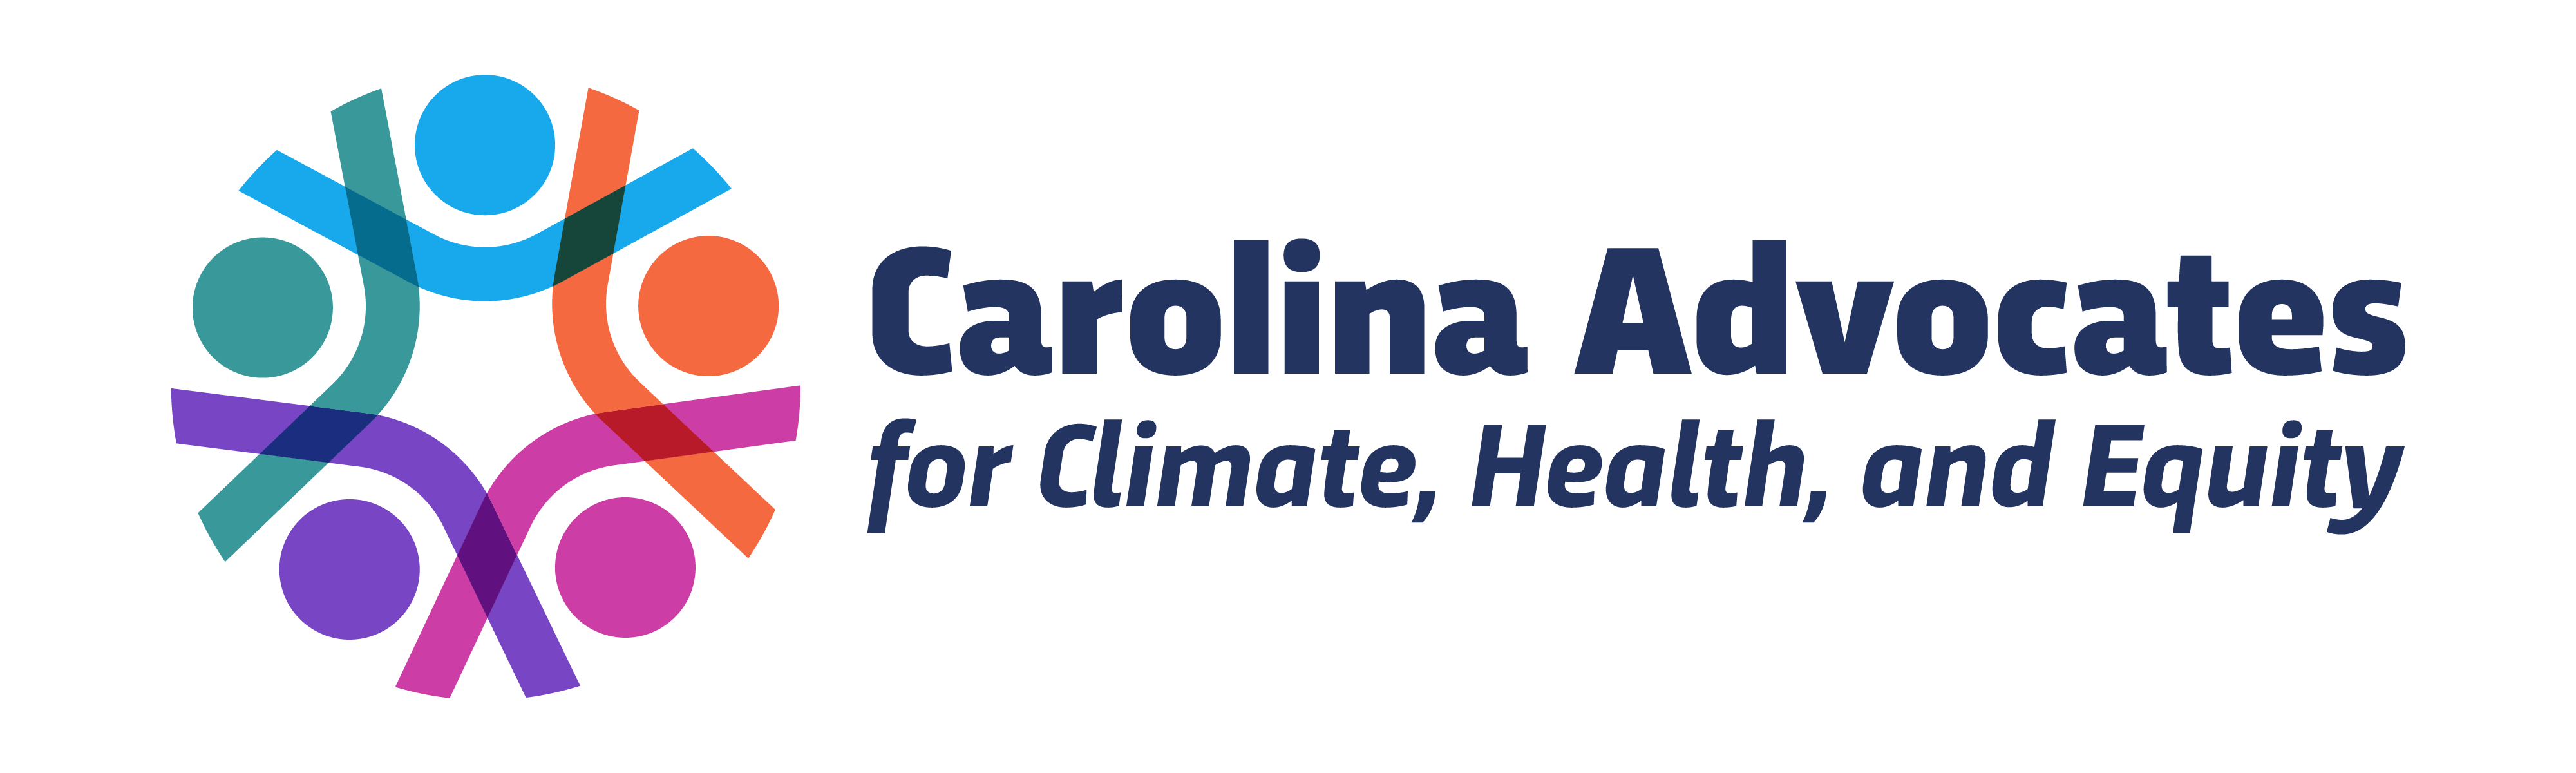 Carolina Advocates for Climate, Health, and Equity